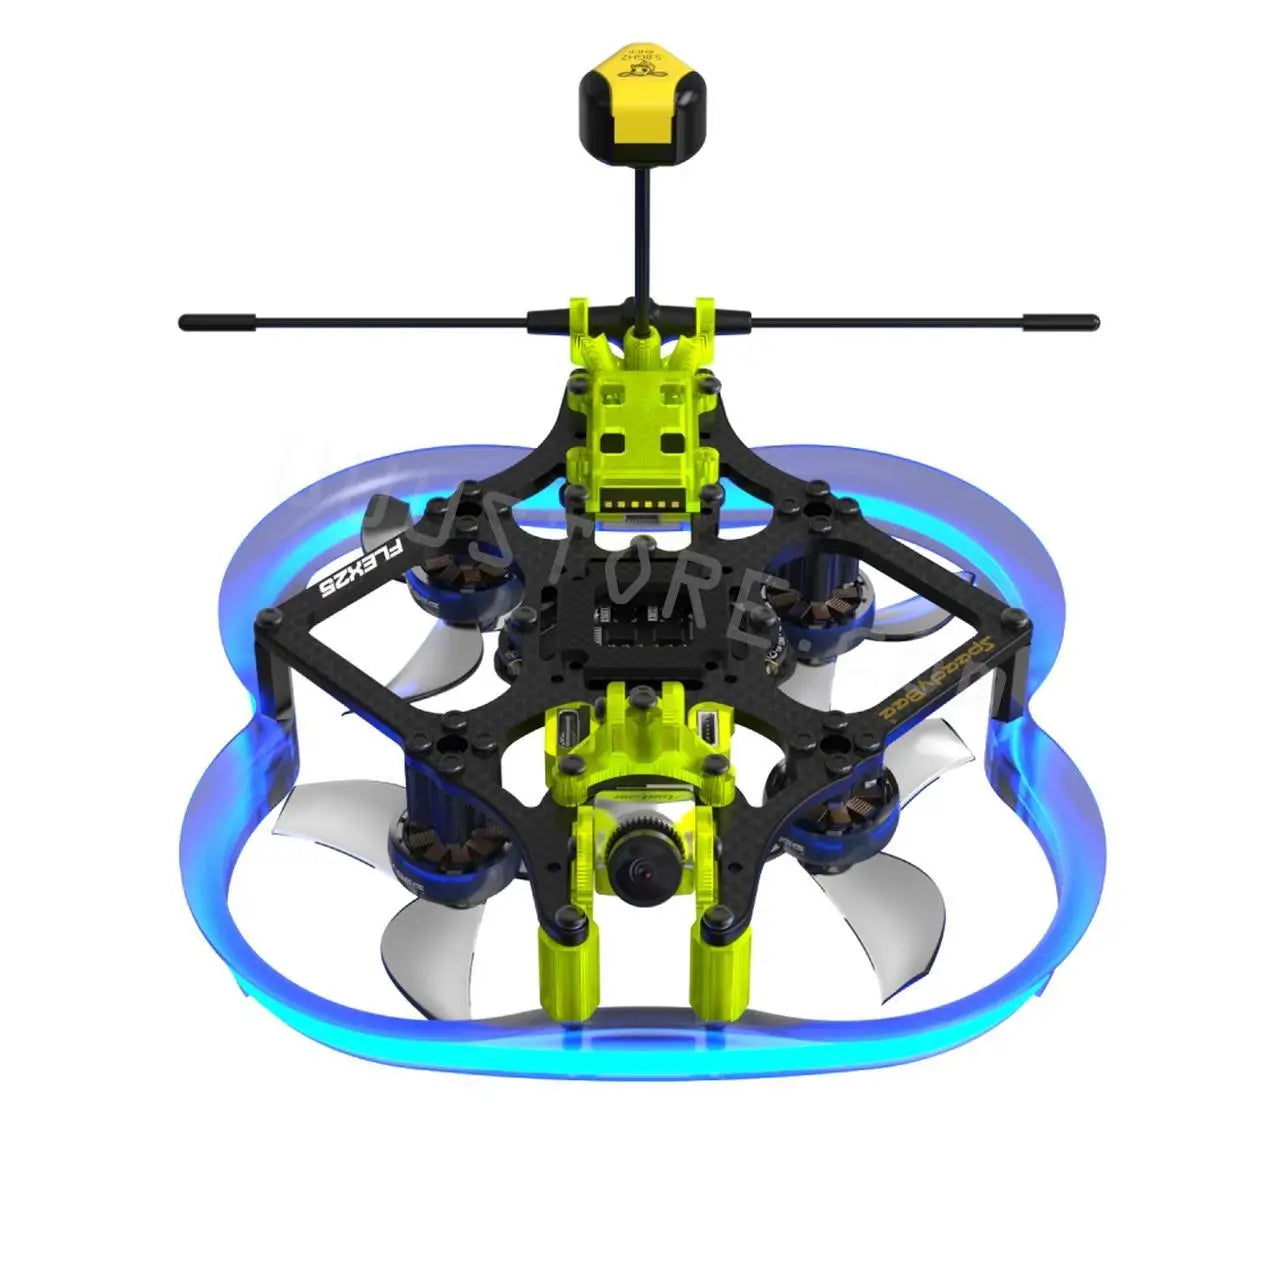 Speedy Bee Flex25 Analog 78mm F7 35A AIO 4S 2.5 Inch Cine Whoop FPV Racing Drone